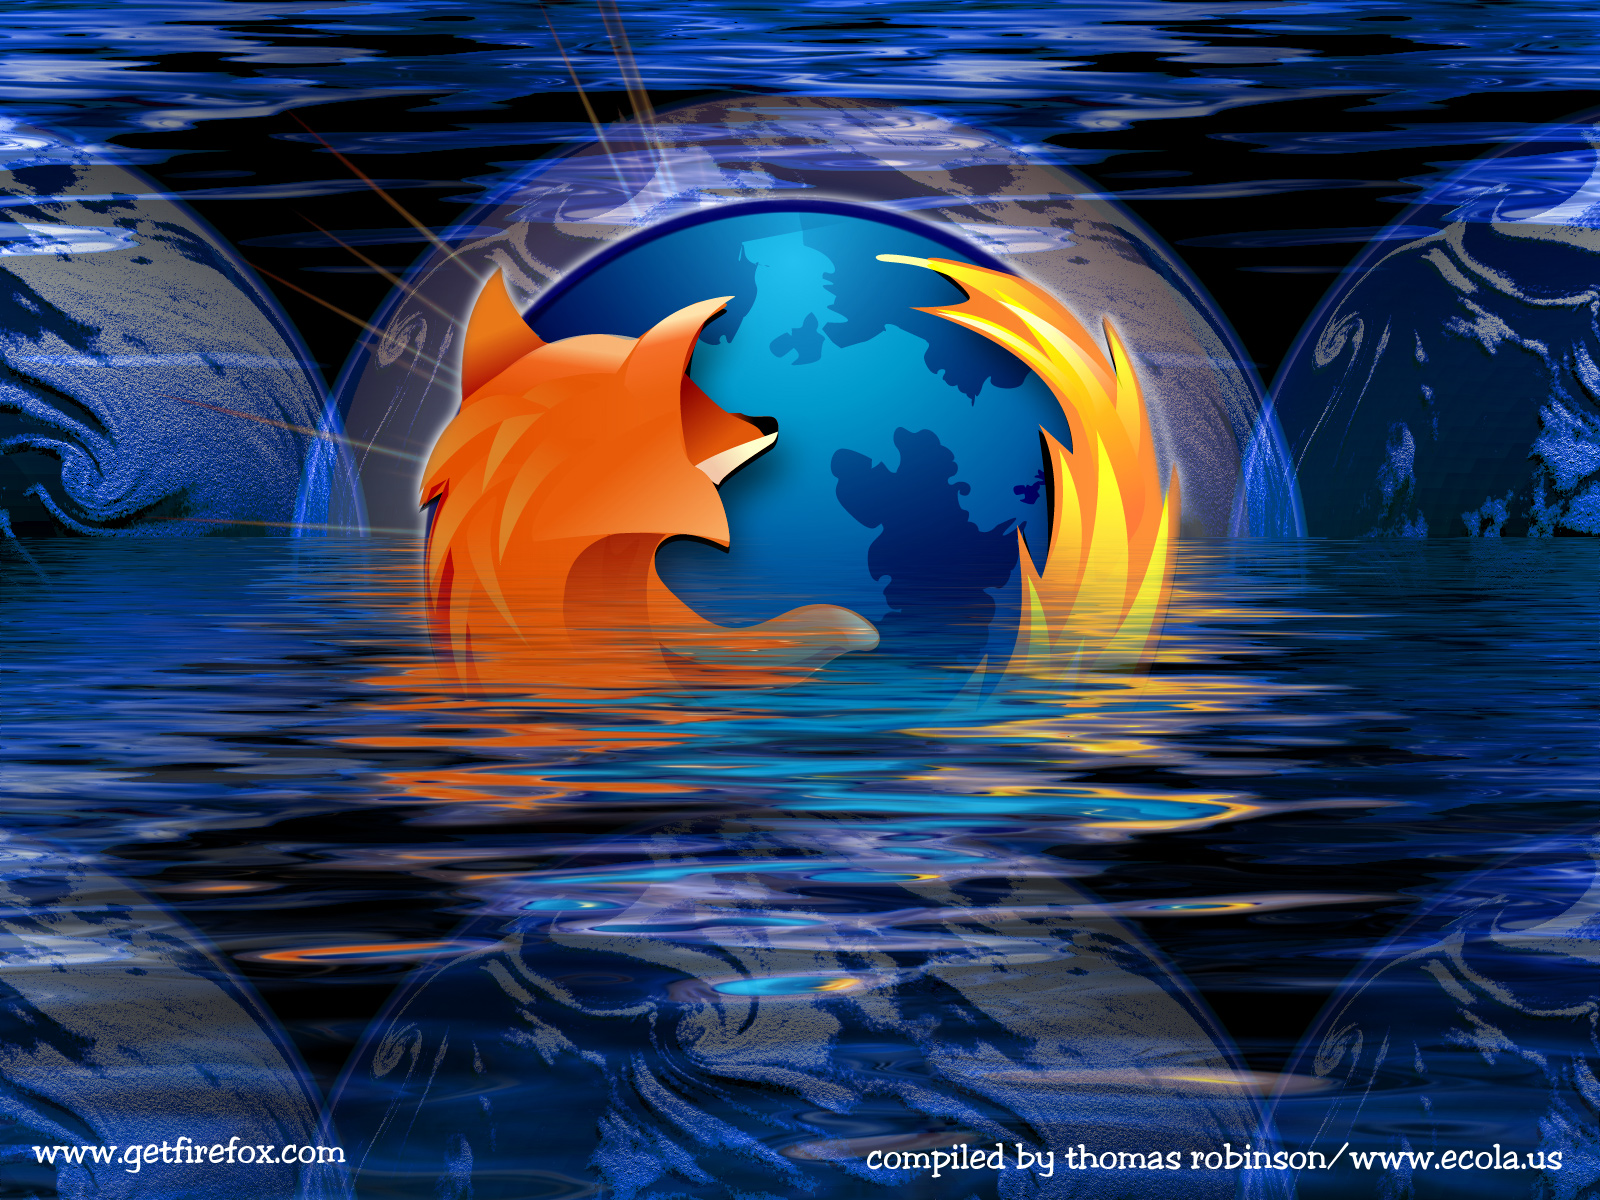 Firefox45 Desktopnexus Jpg